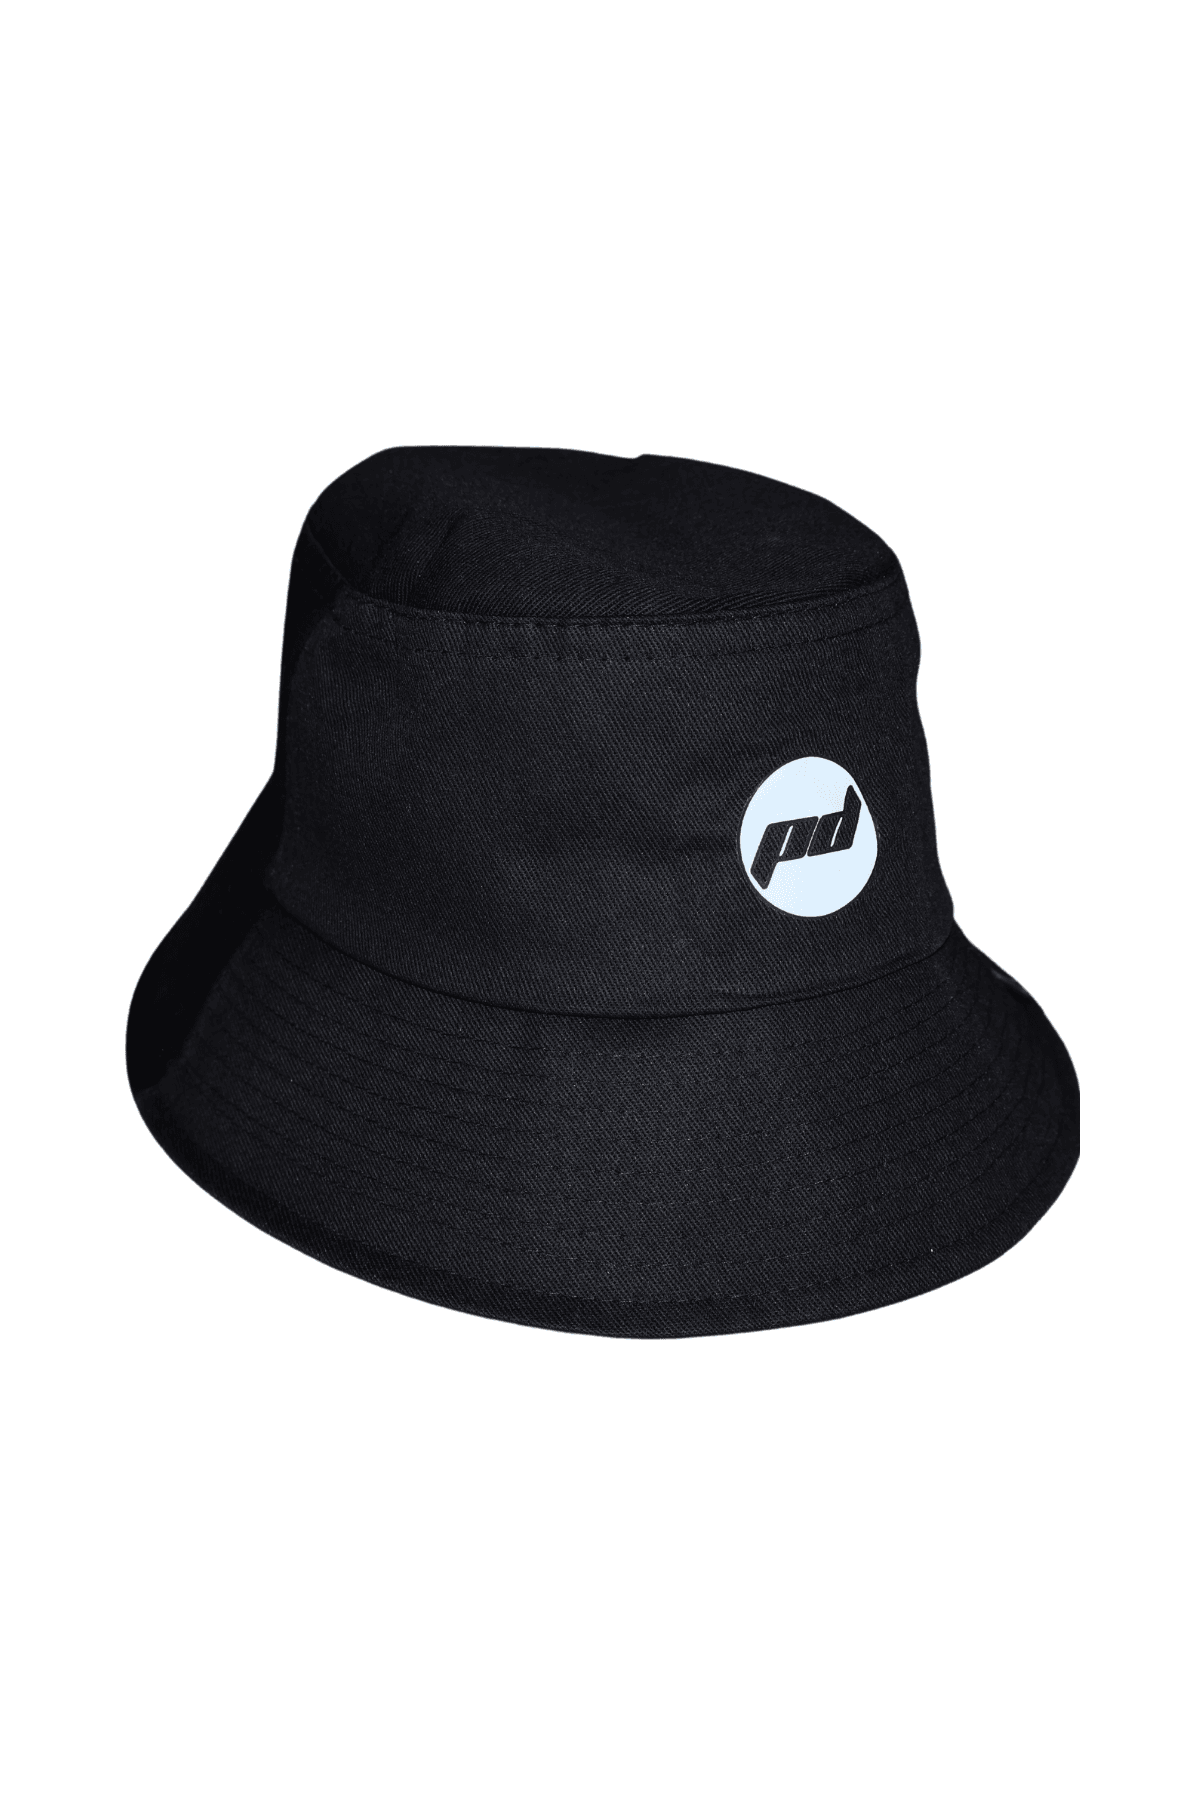 CopperHead Bucket Hat  - BLACK